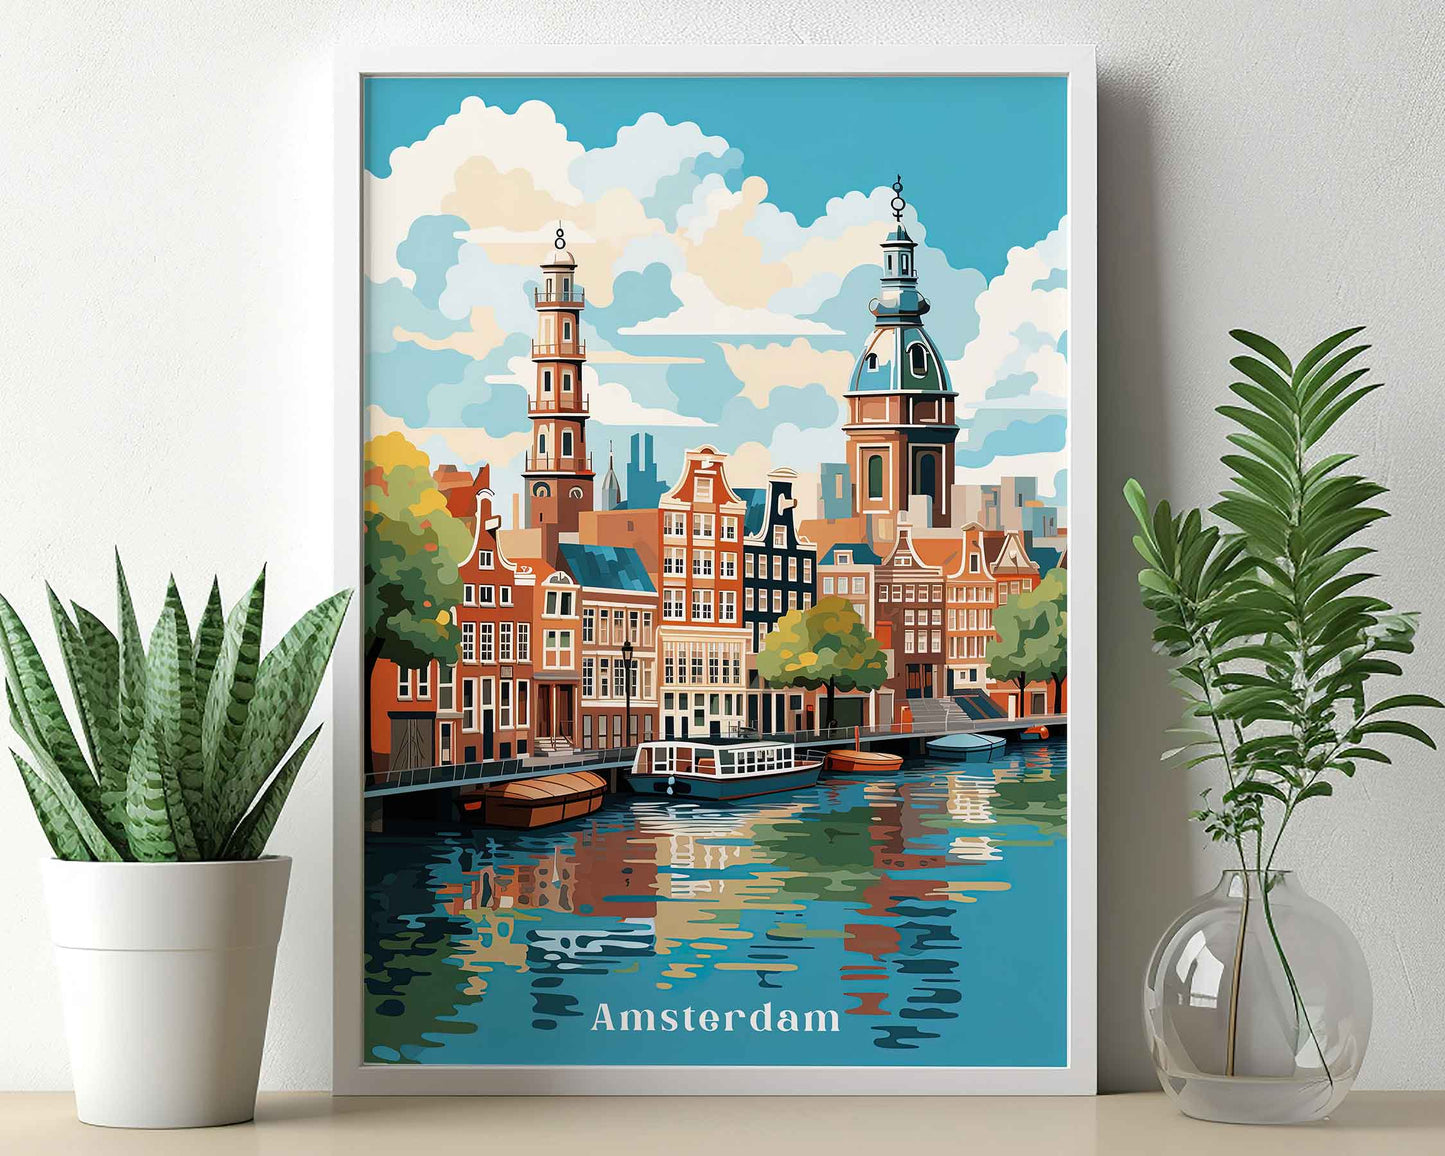 Framed Image of Amsterdam Travel Print Holland Wall Art Poster Illustration